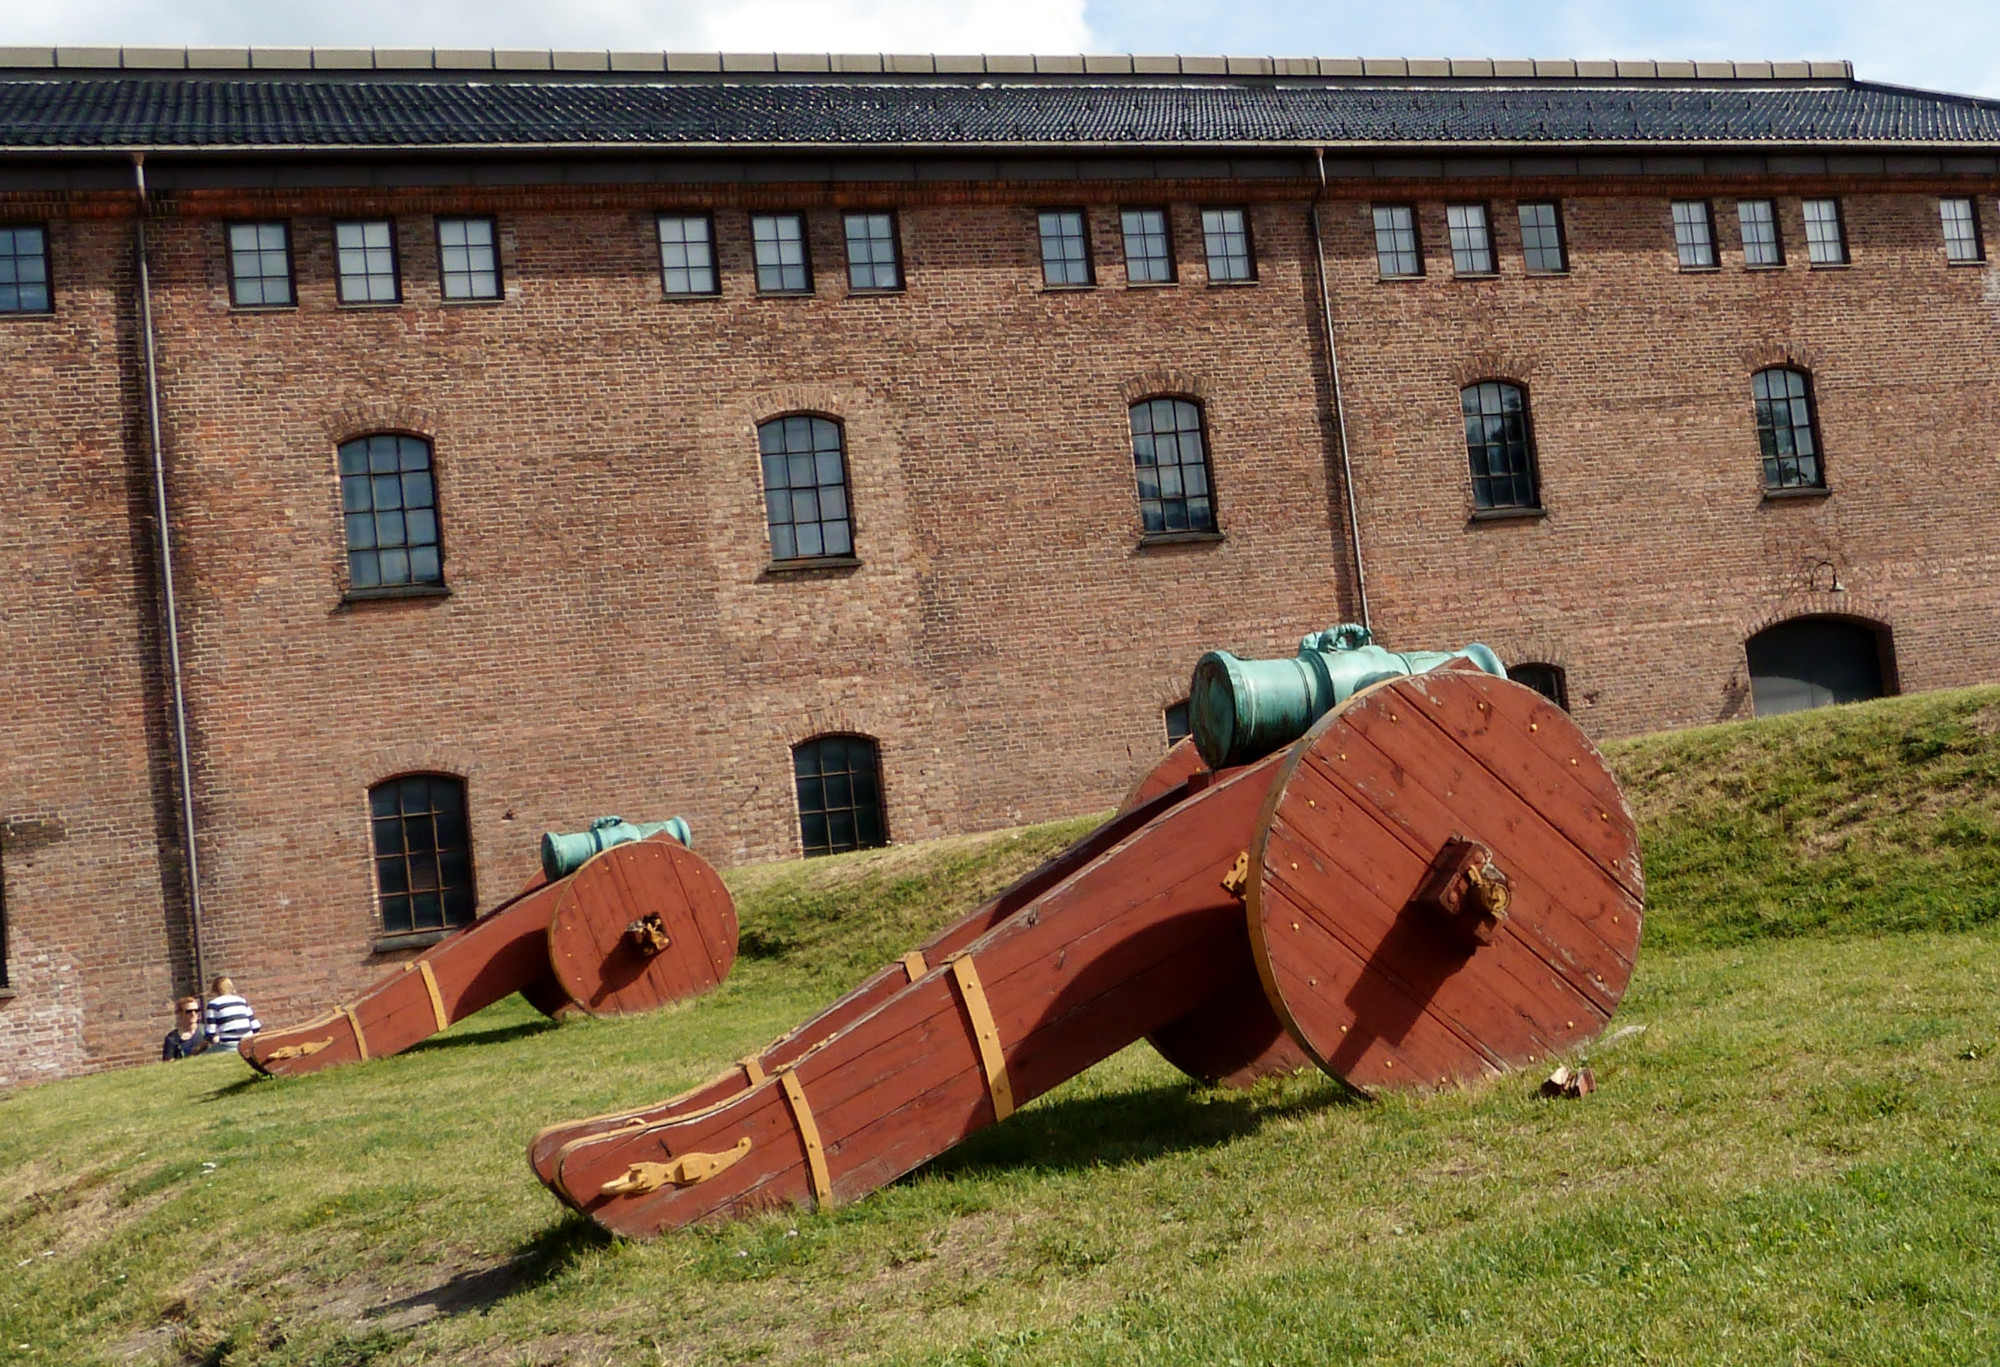 Norweigen Armed Forces Museum